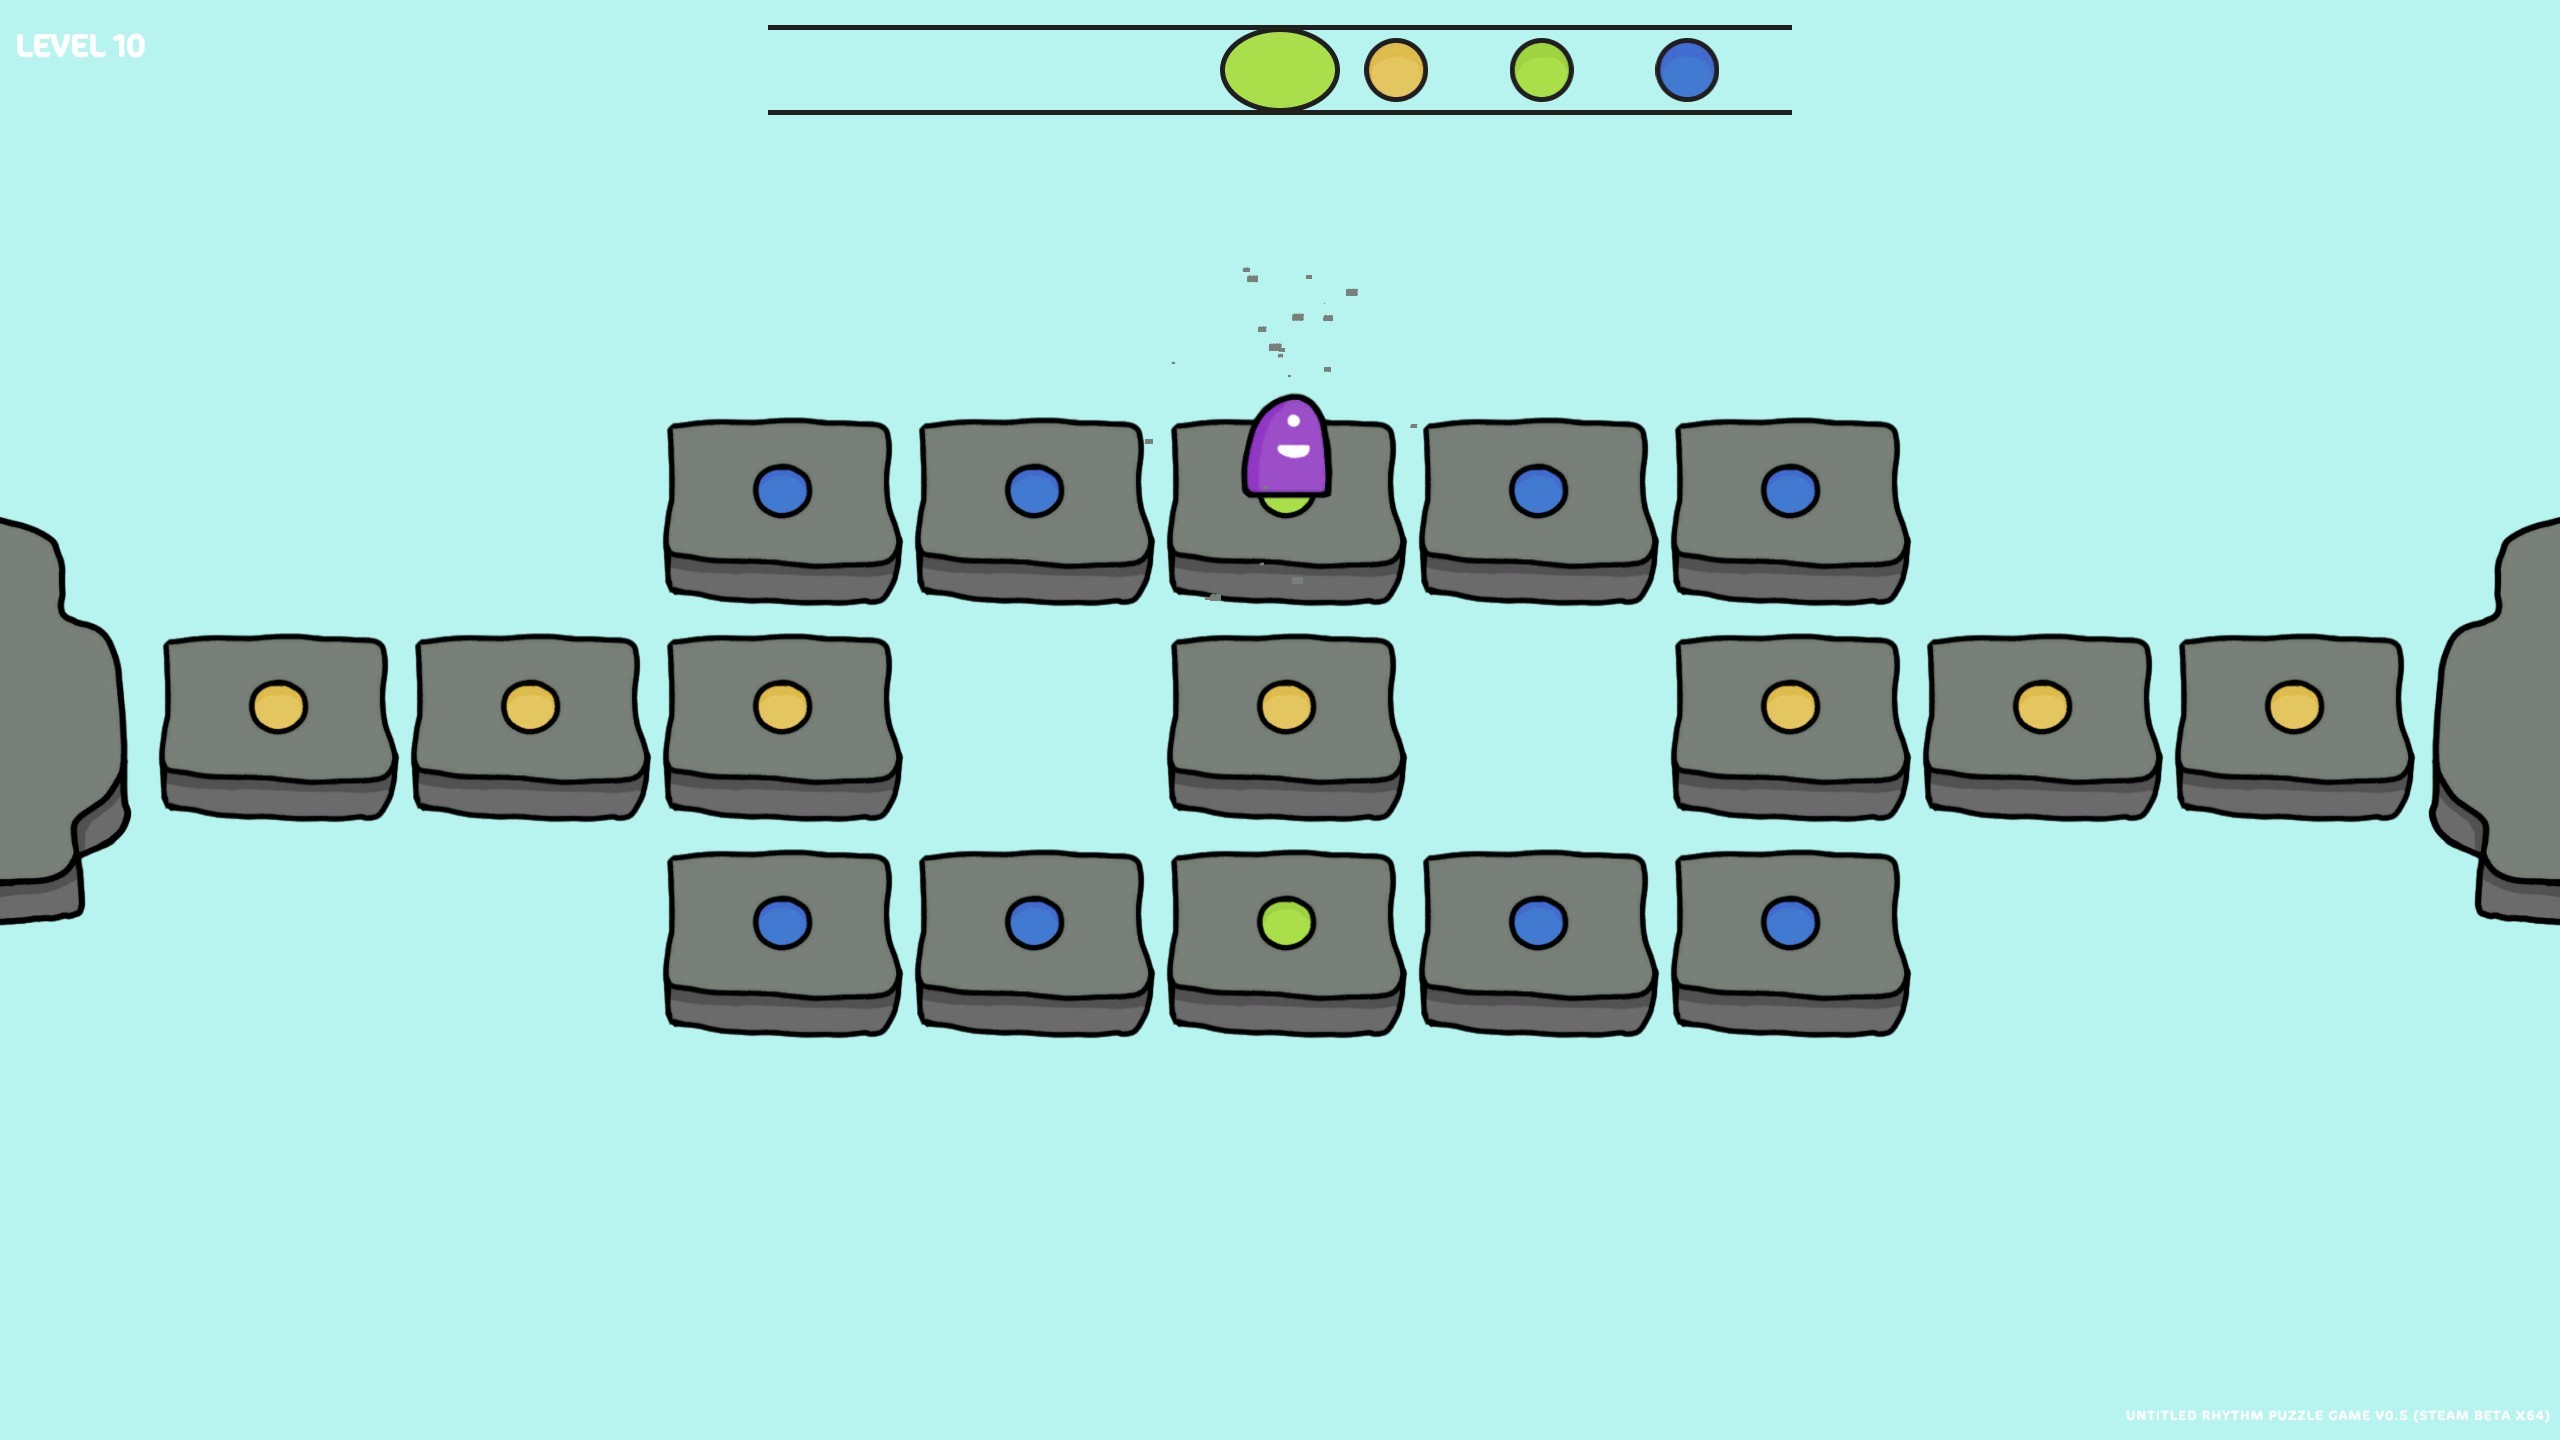 Untitled Rhythm Puzzle Game screenshot